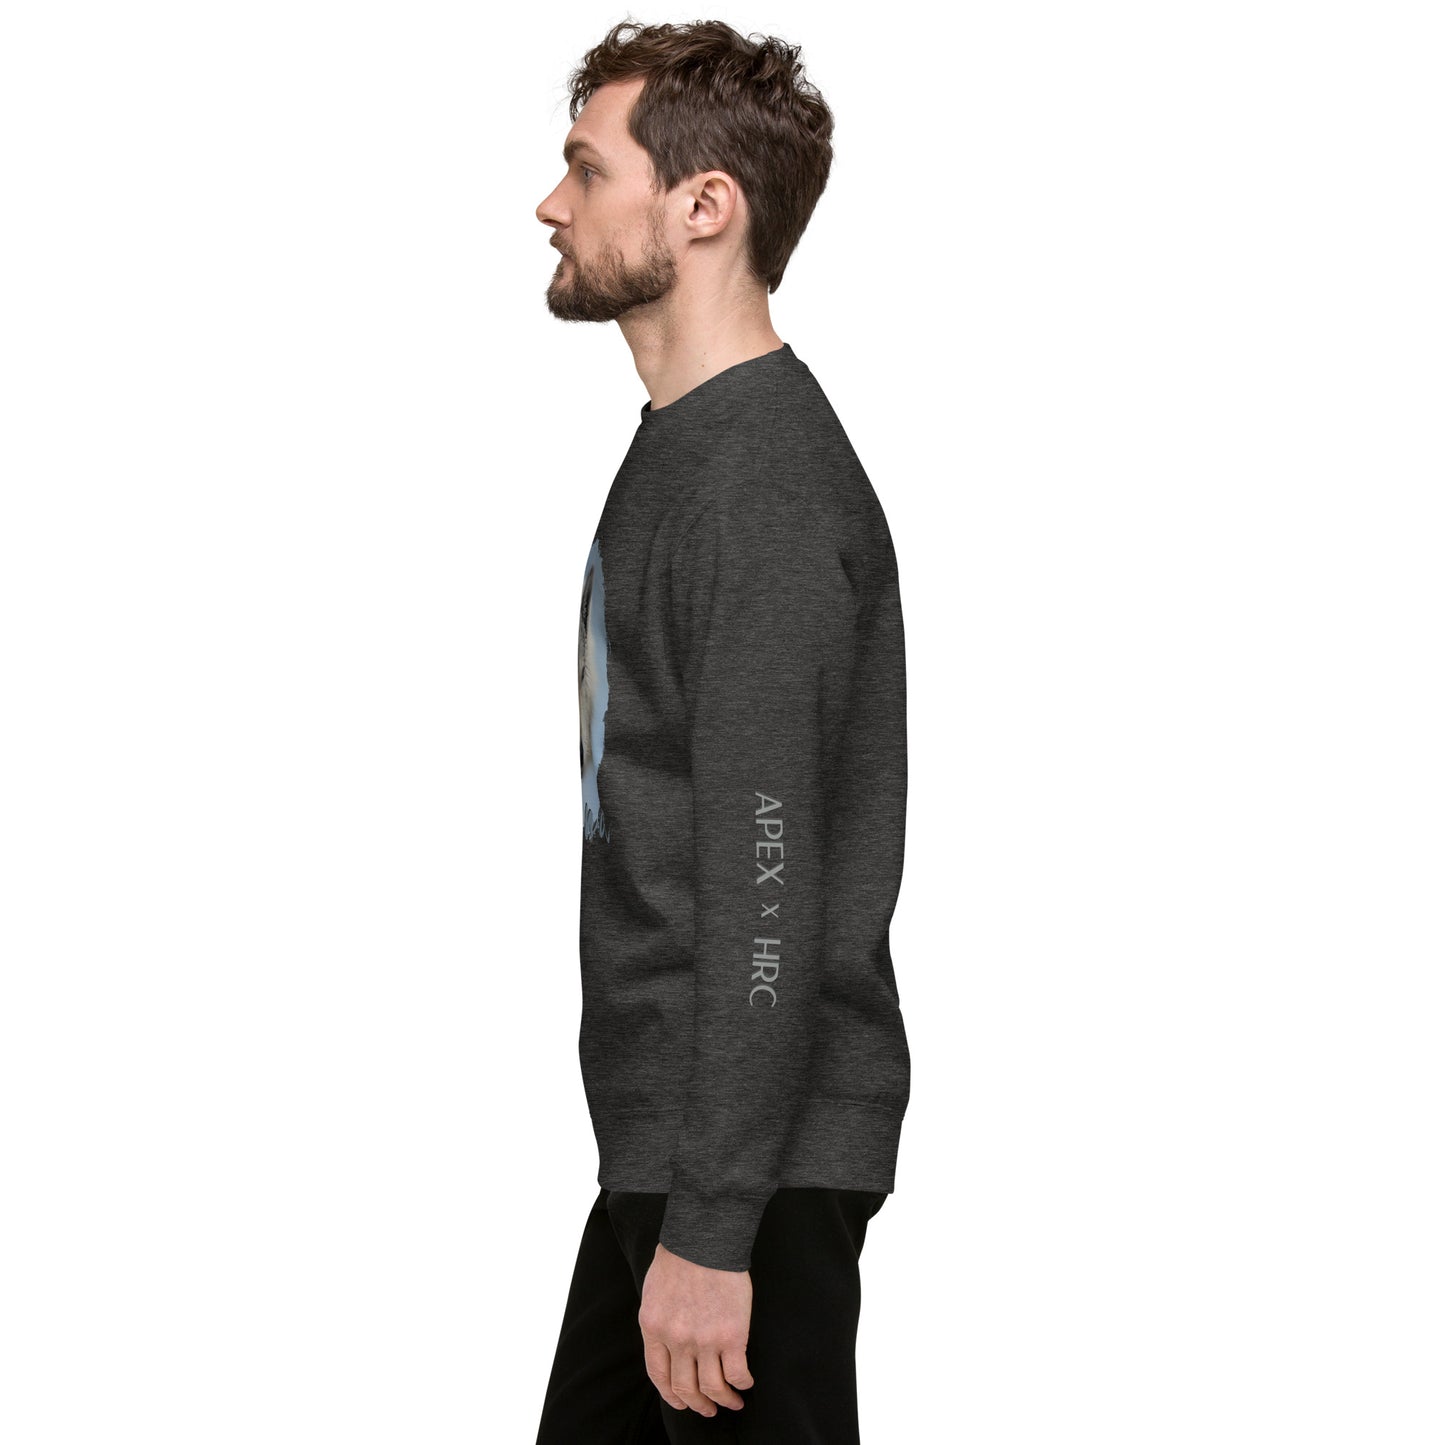 Kona Unisex Premium Sweatshirt